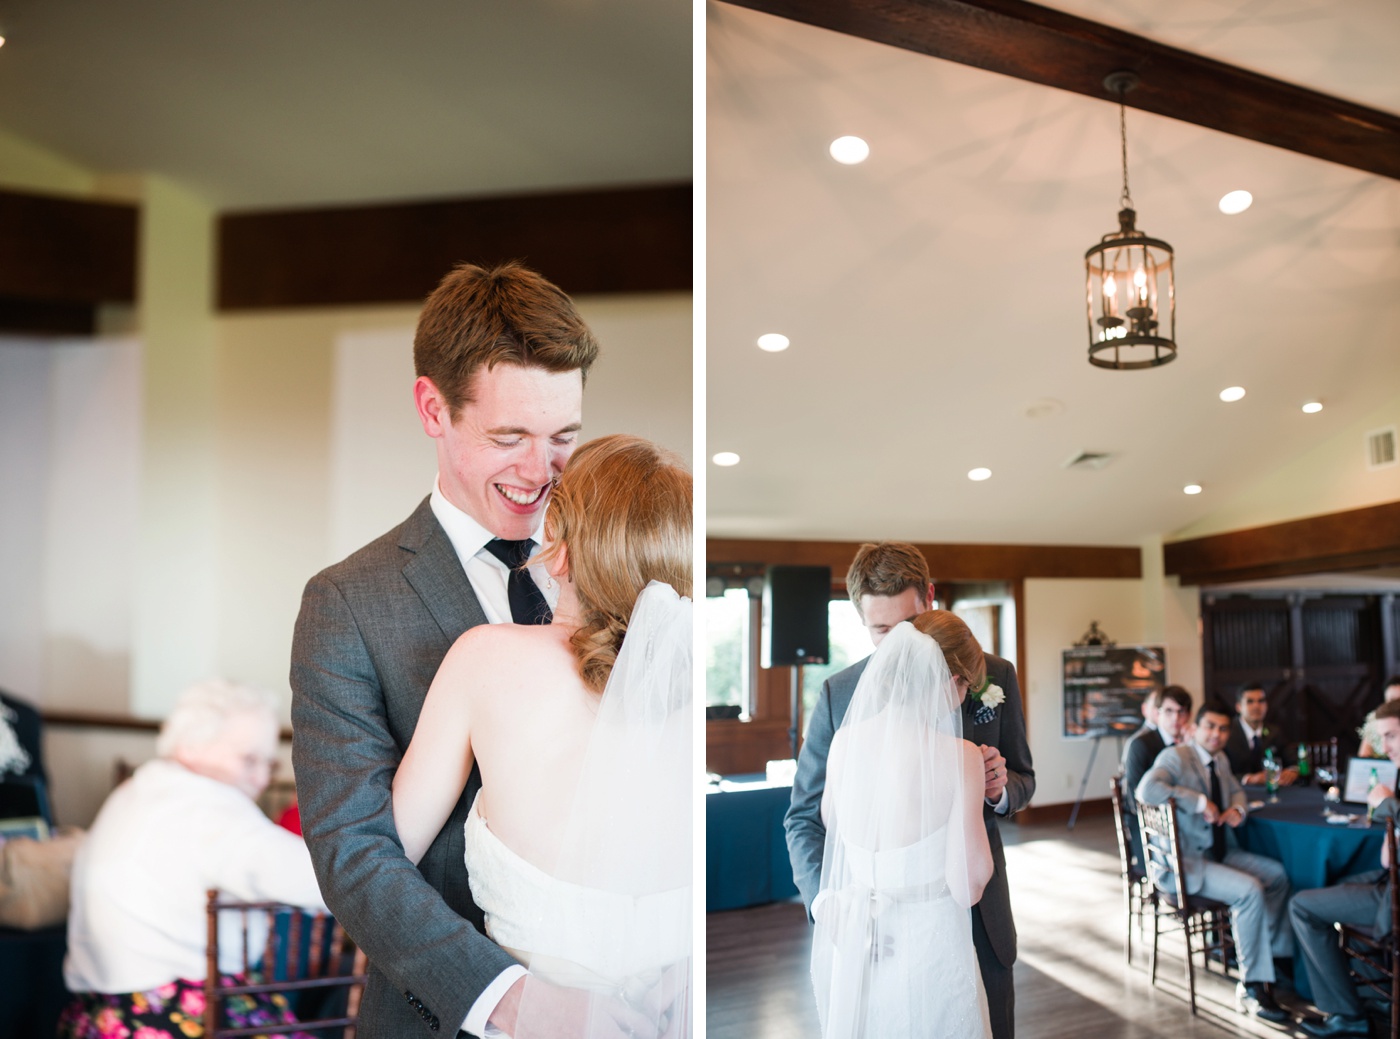 Kristen + Josh - Olde Homestead Golf Club Wedding Reception - New Tripoli Pennsylvania Photographer - Alison Dunn Photography